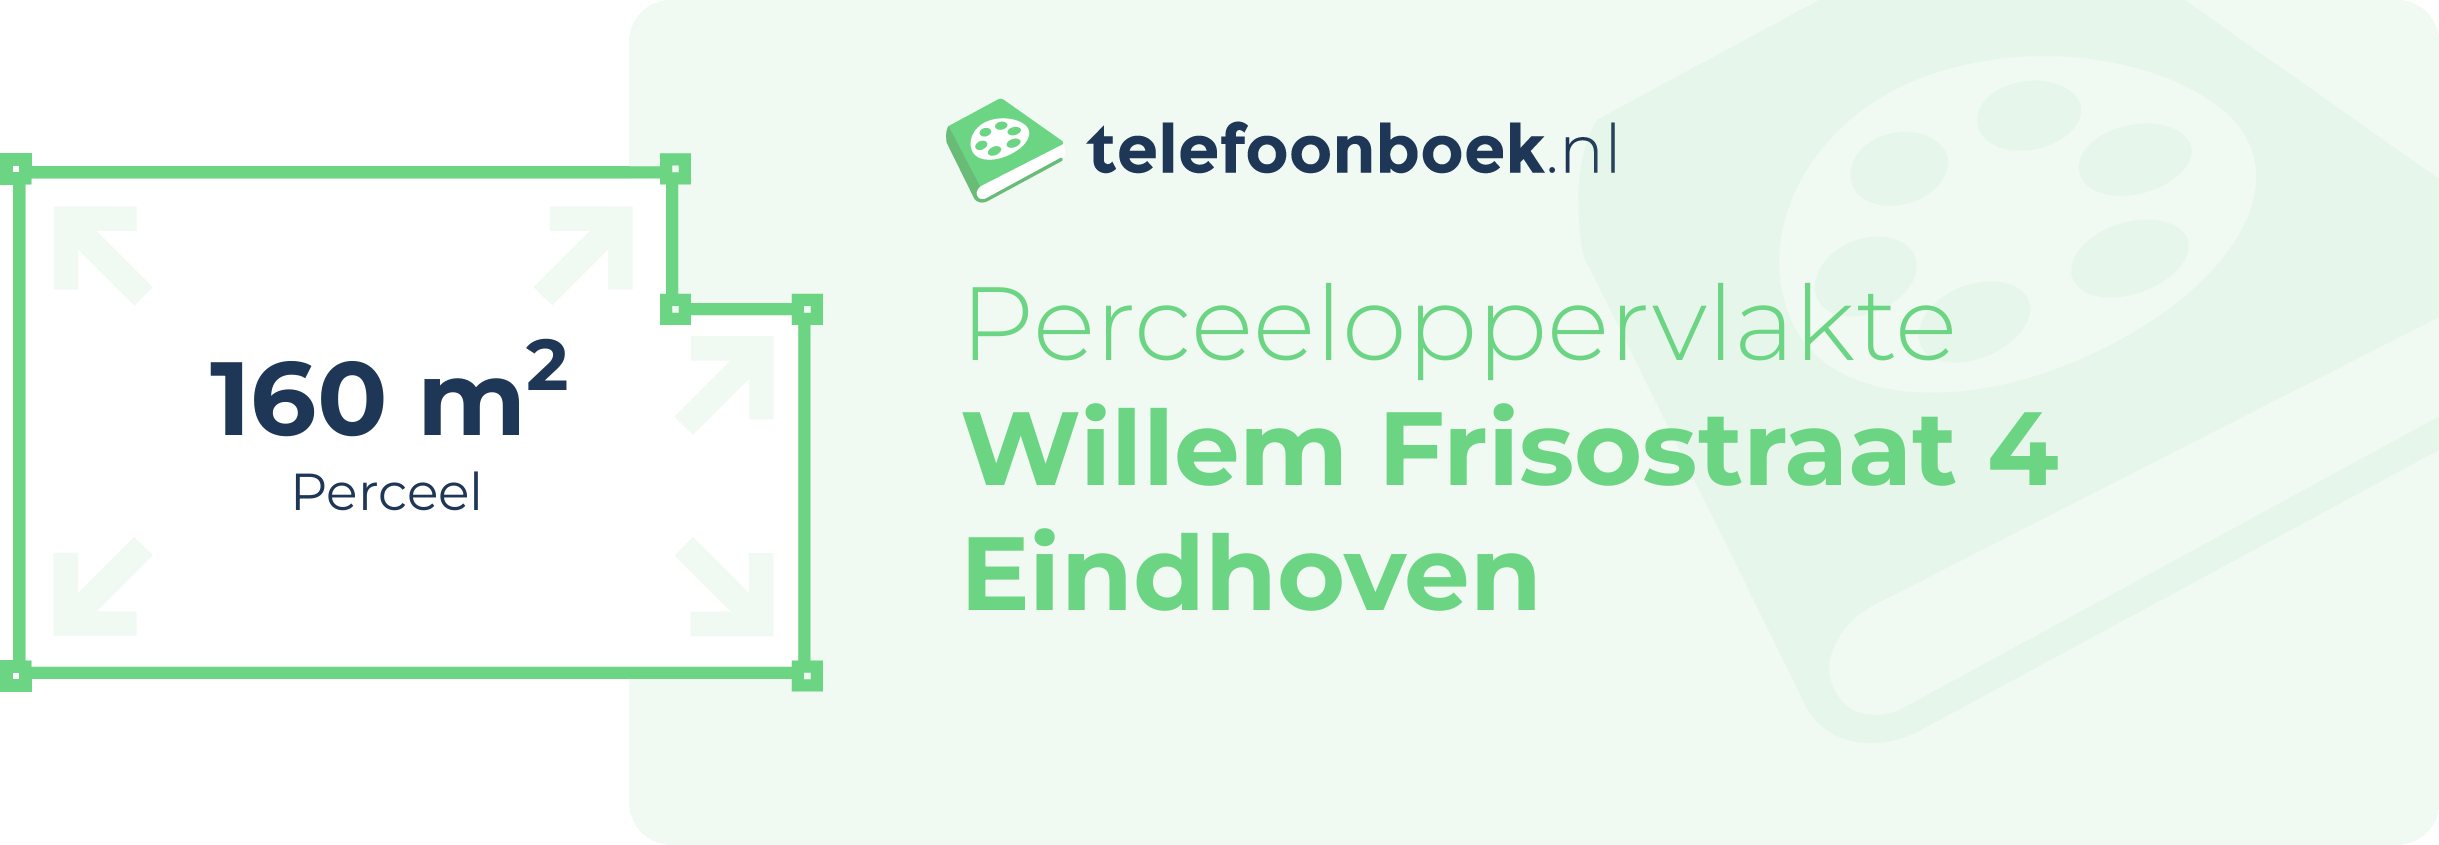 Perceeloppervlakte Willem Frisostraat 4 Eindhoven